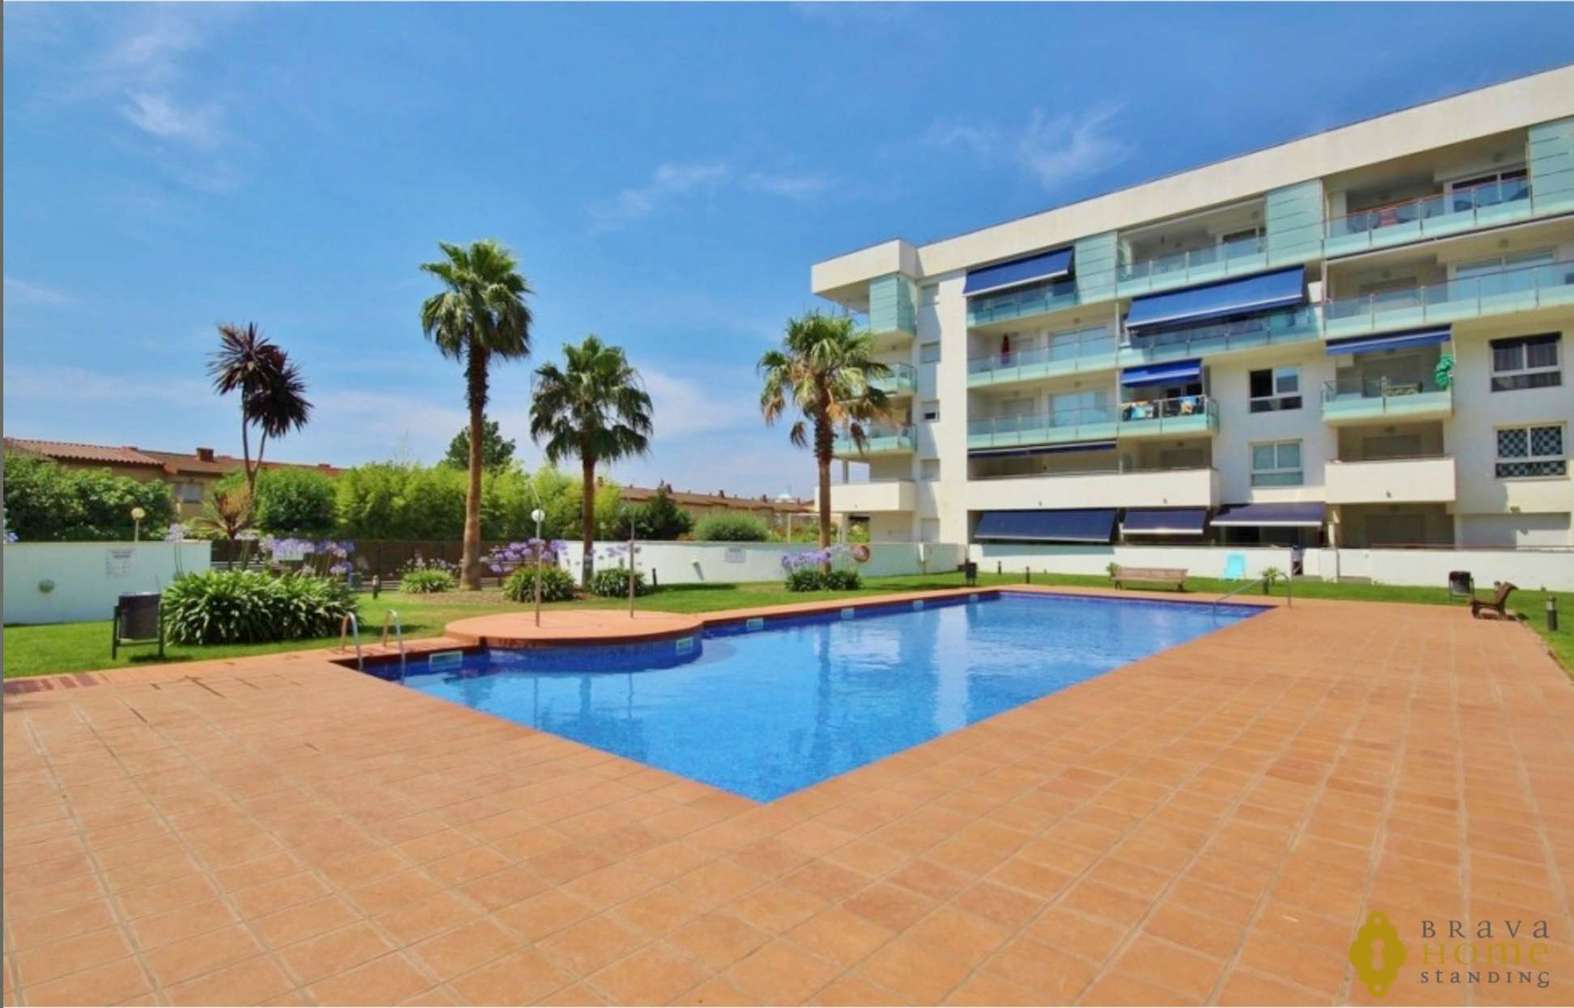 Superb apartment with terrace of 45sqm for sale Rosas Santa Margarita